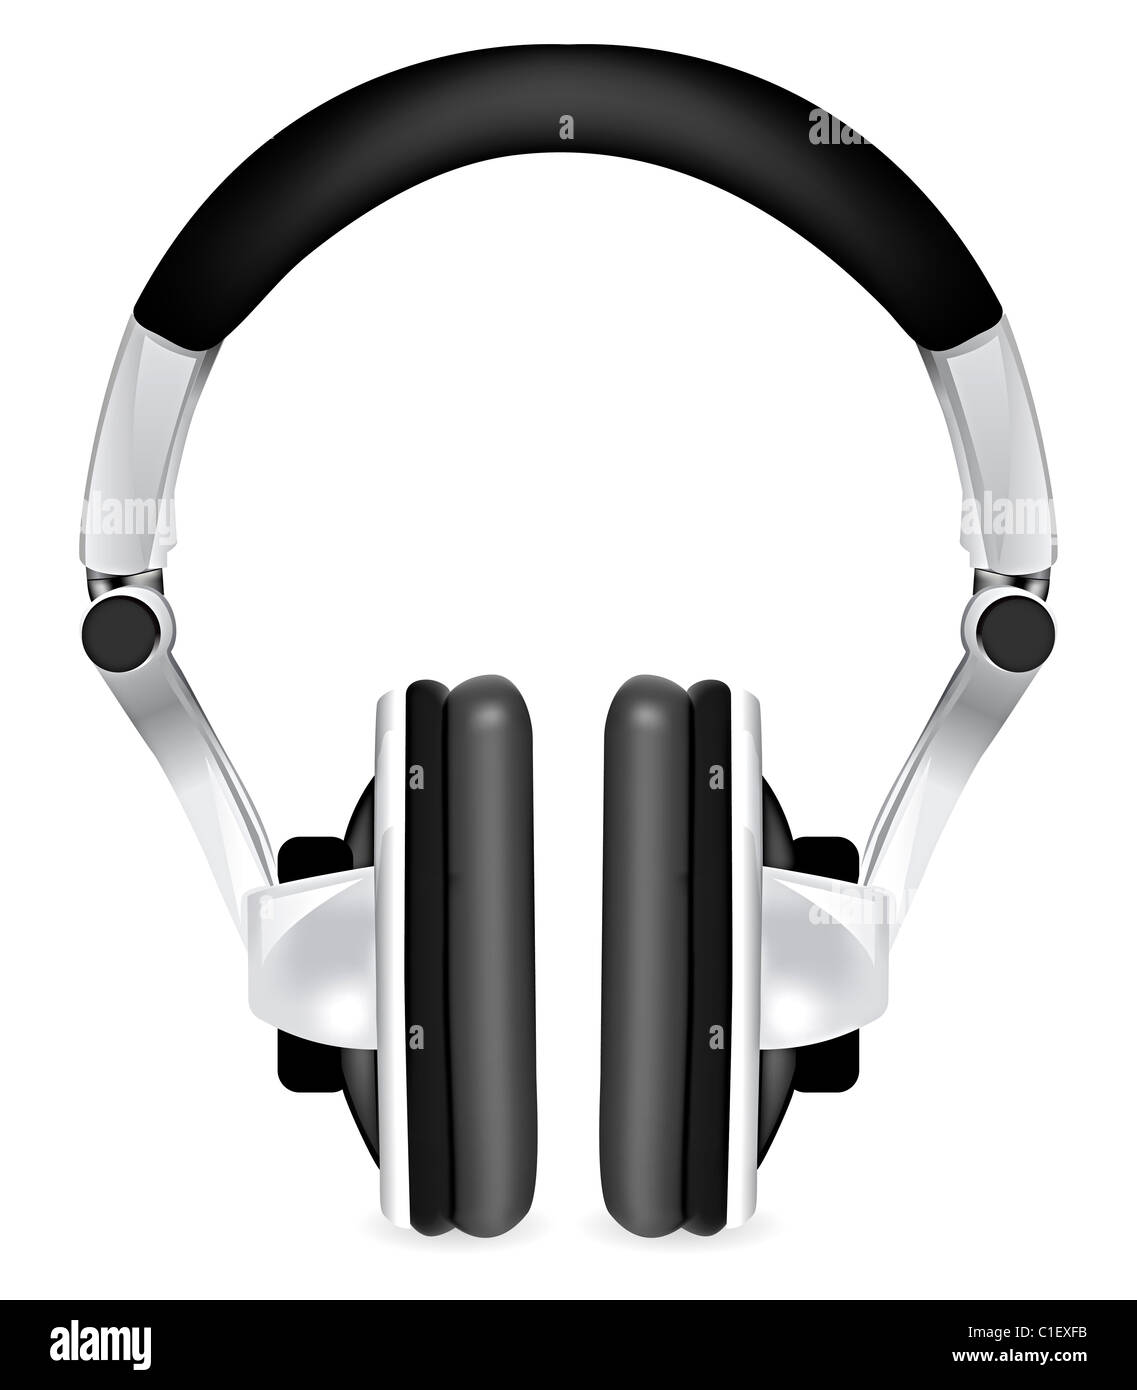 Professional icon of the headphones. Mesh tool used Stock Photo